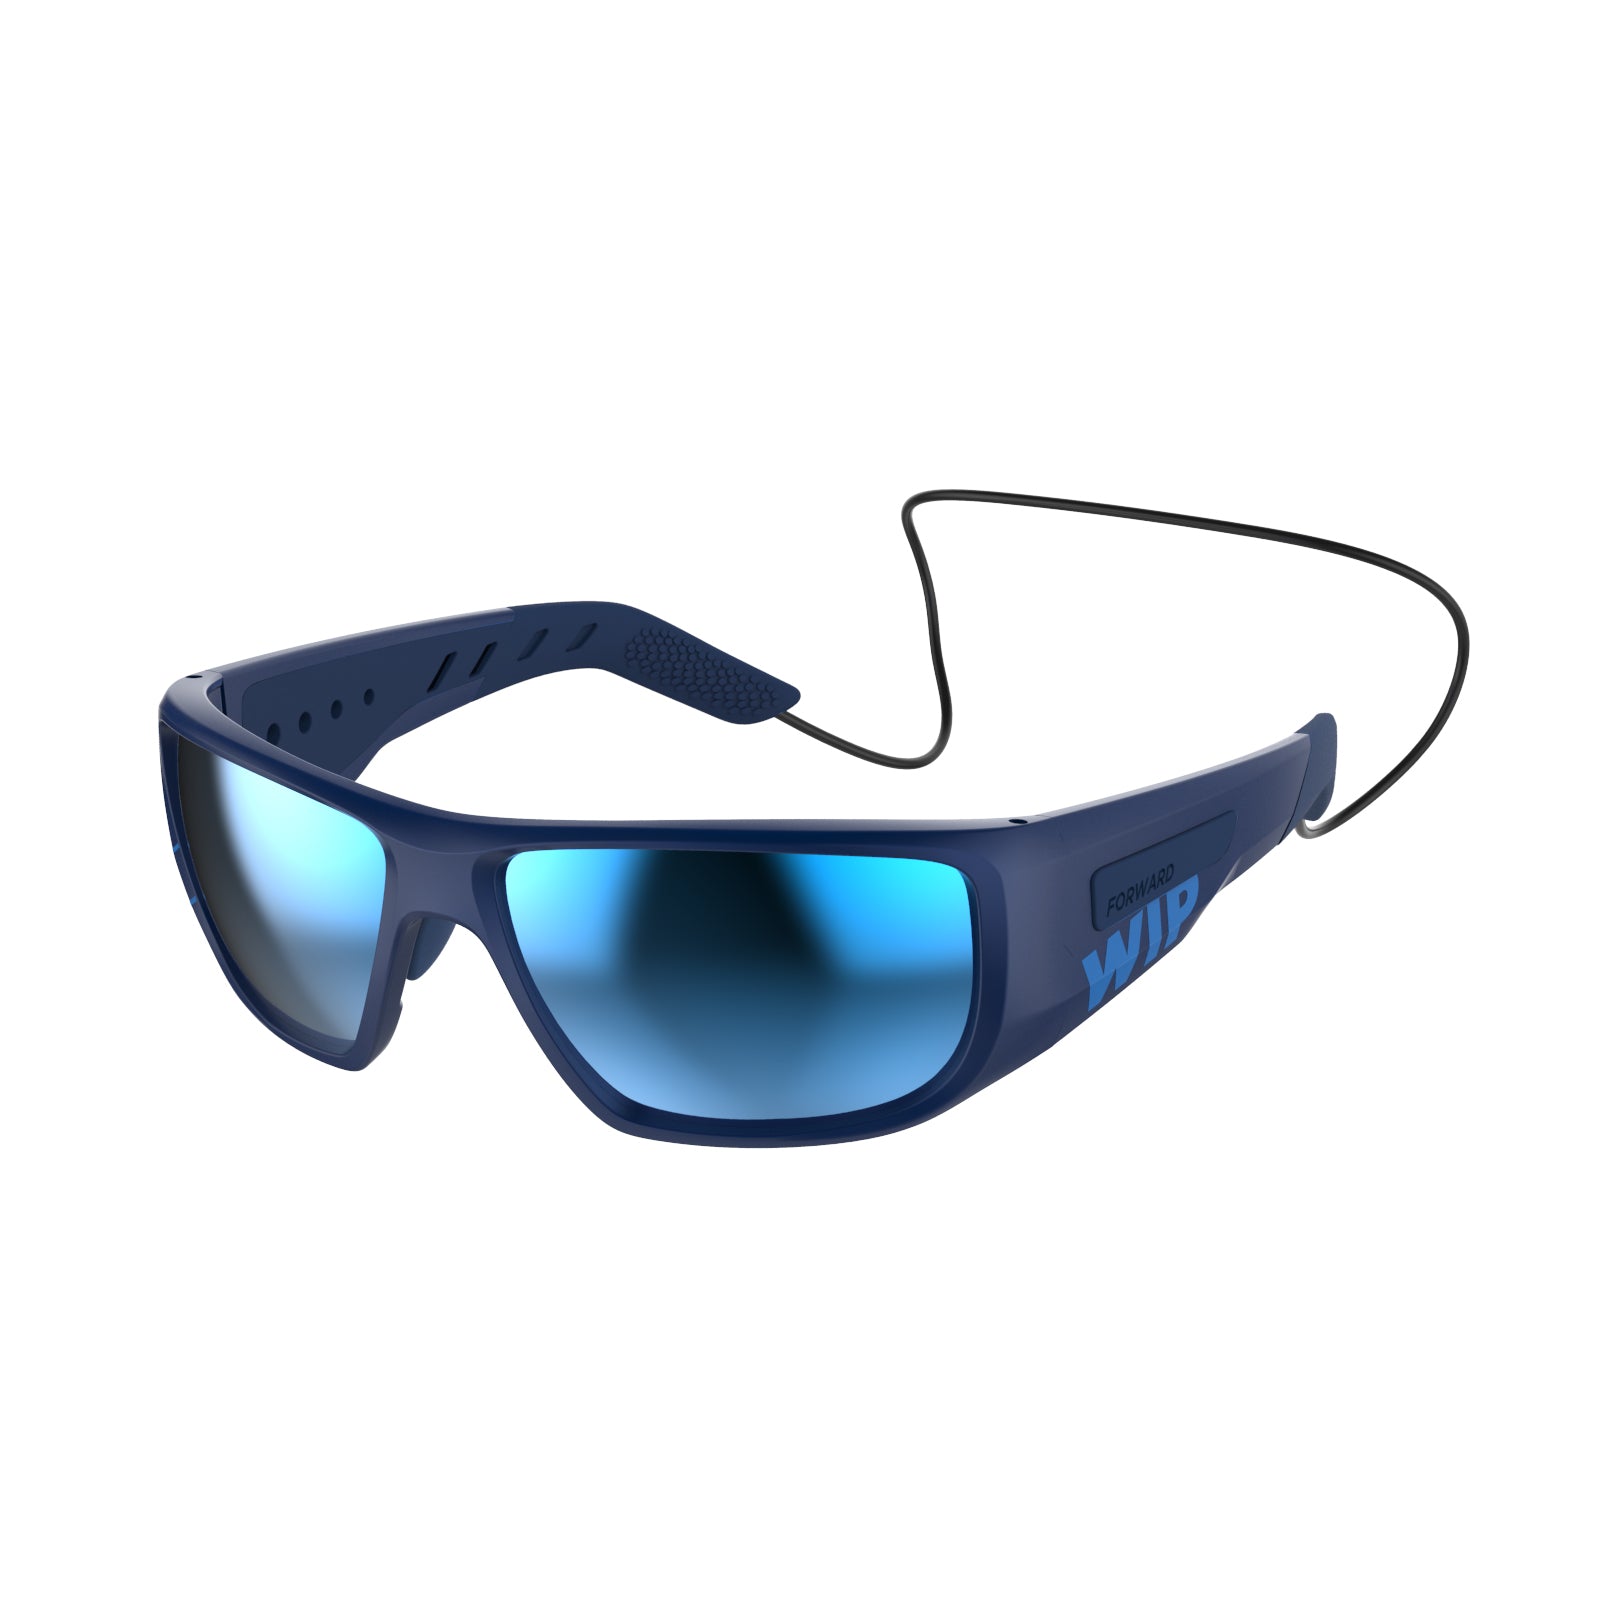 Forward XL Gust Evo Sunglasses